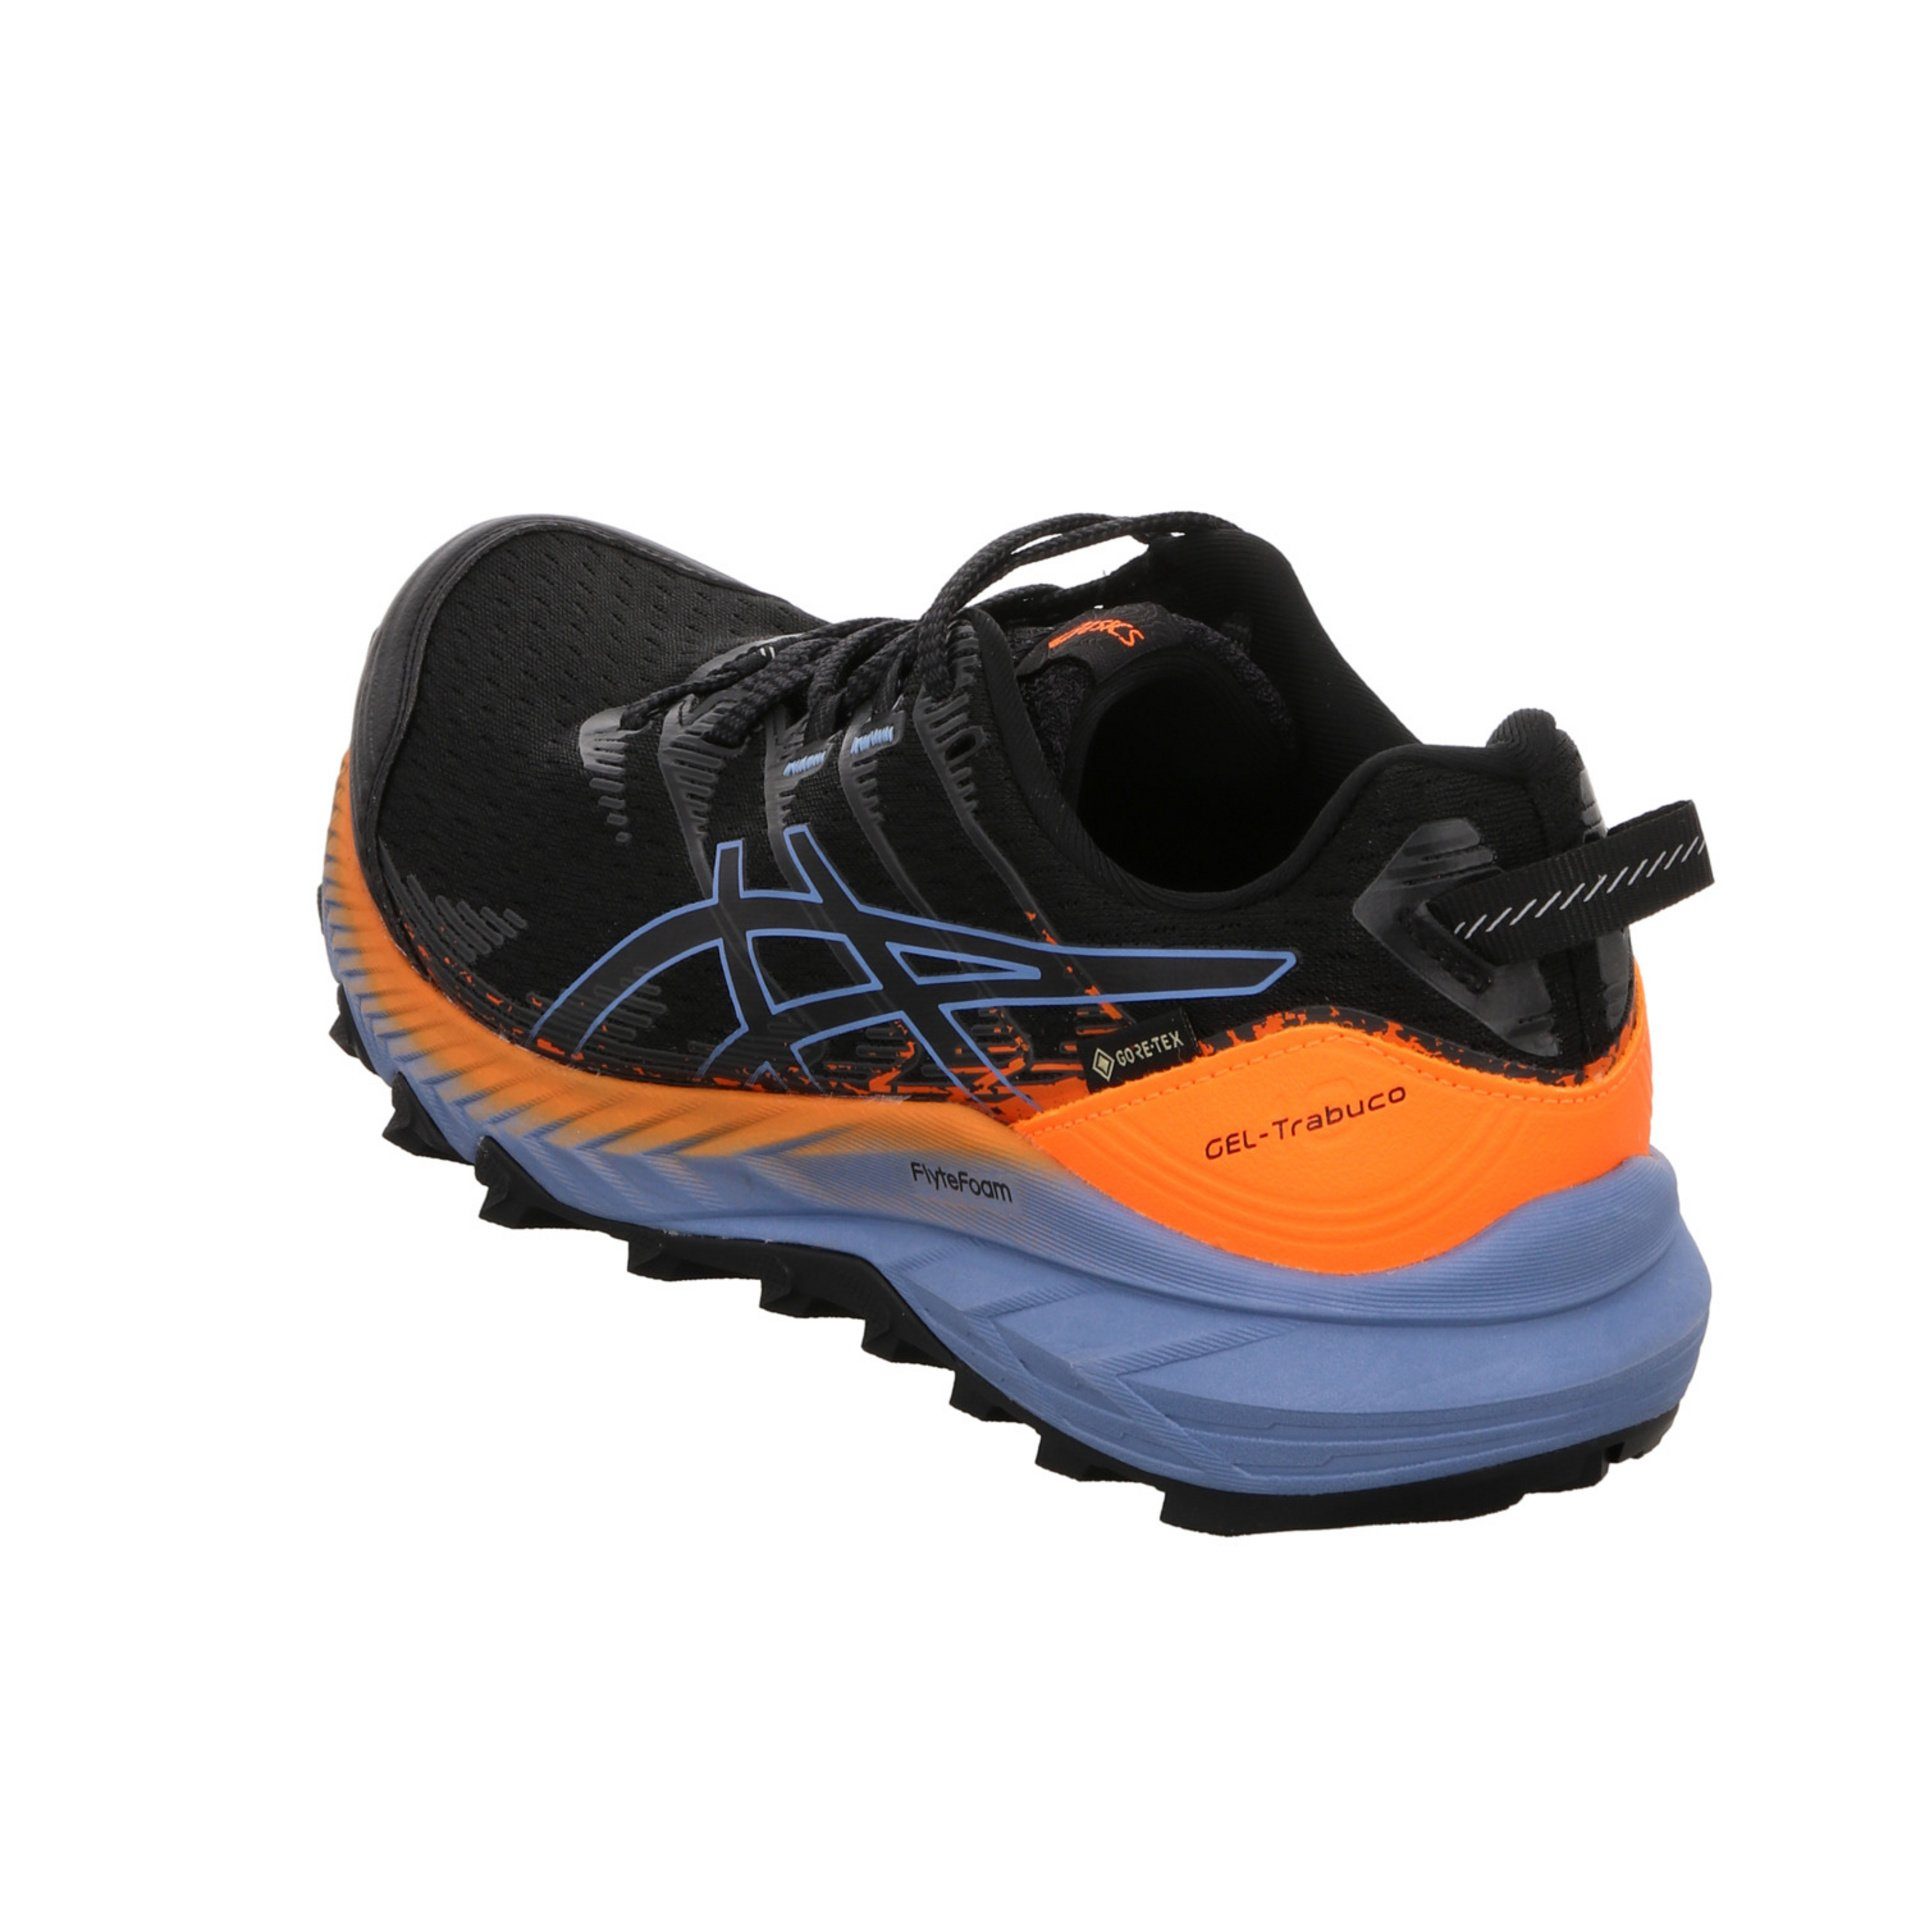 Synthetikkombination Trailrunner kombi-blau/g Gel schwarz Trabuco GTX Asics Sneaker 10